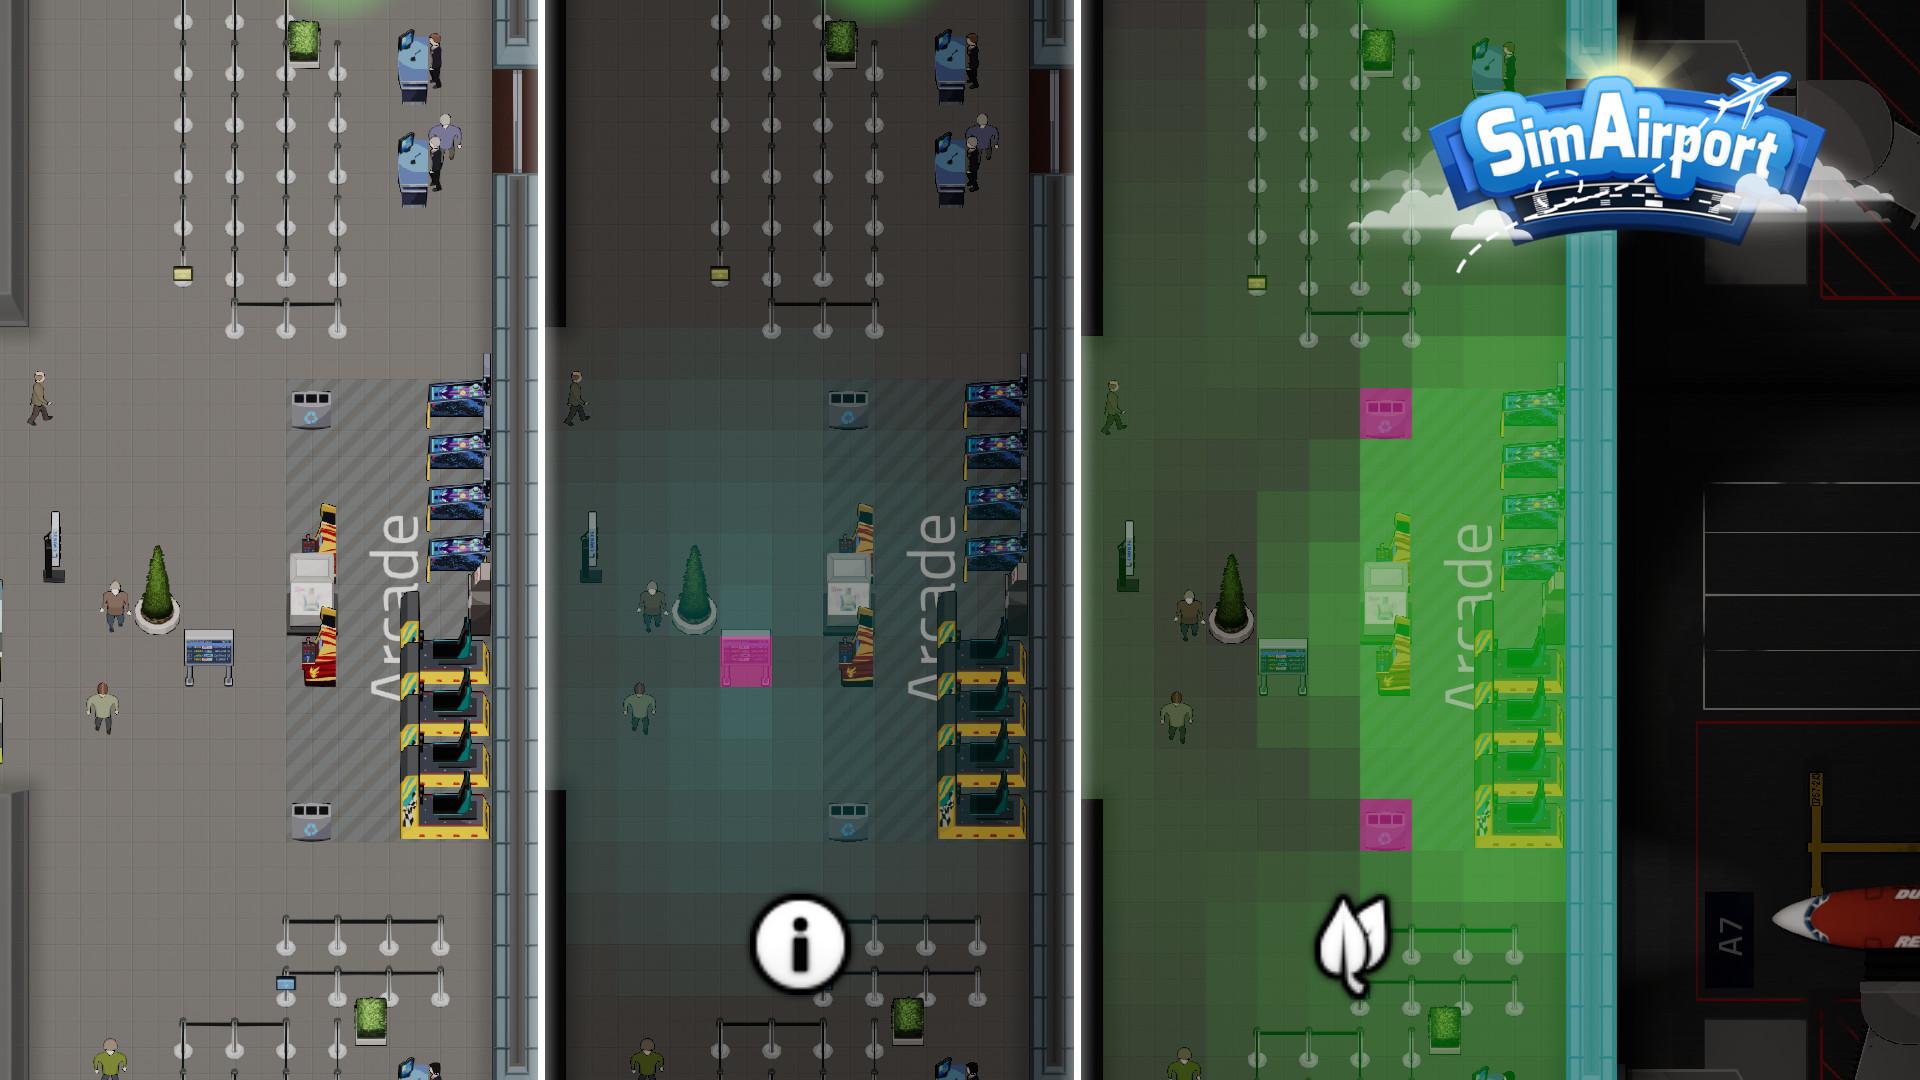 Screenshot №5 from game SimAirport